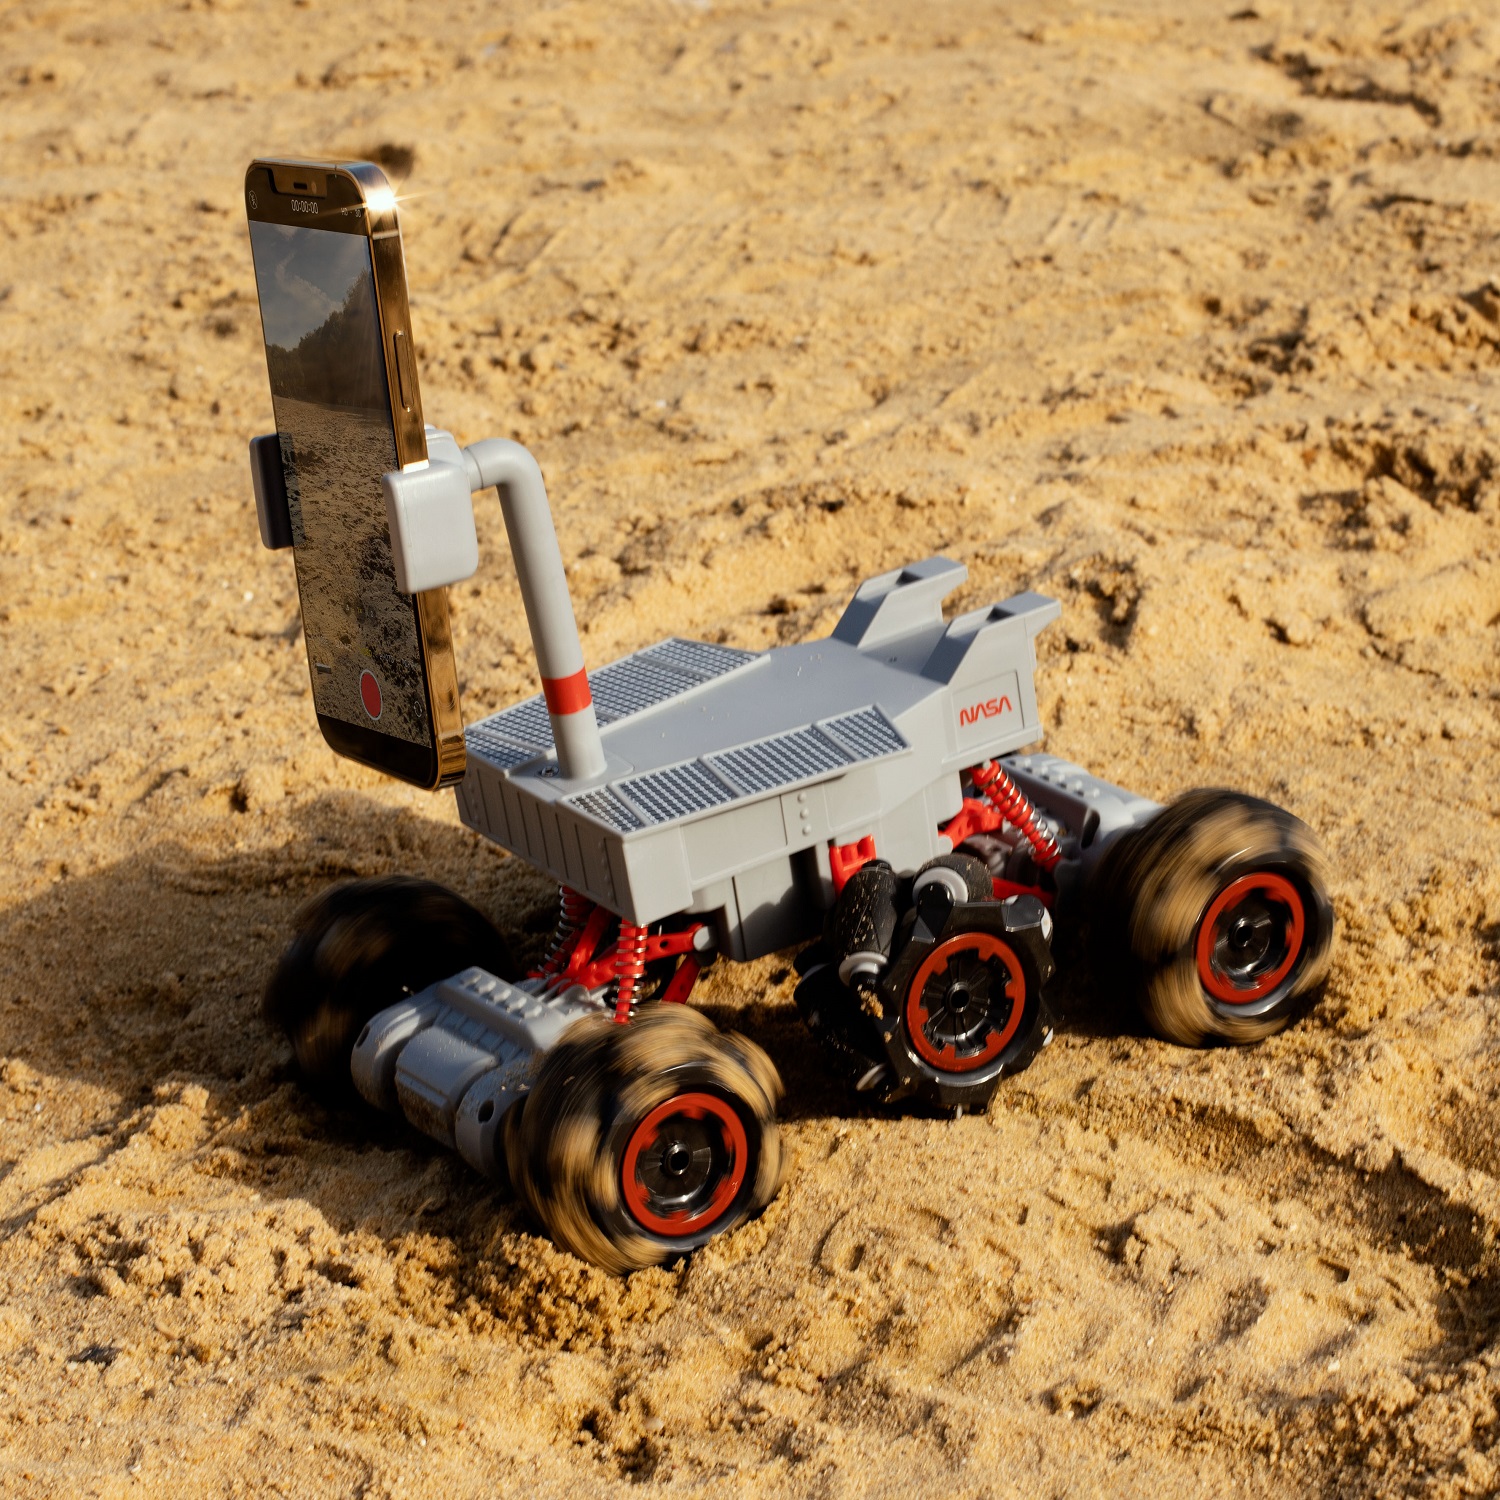 Mars Rover NASA RC (Opportunity Rover)